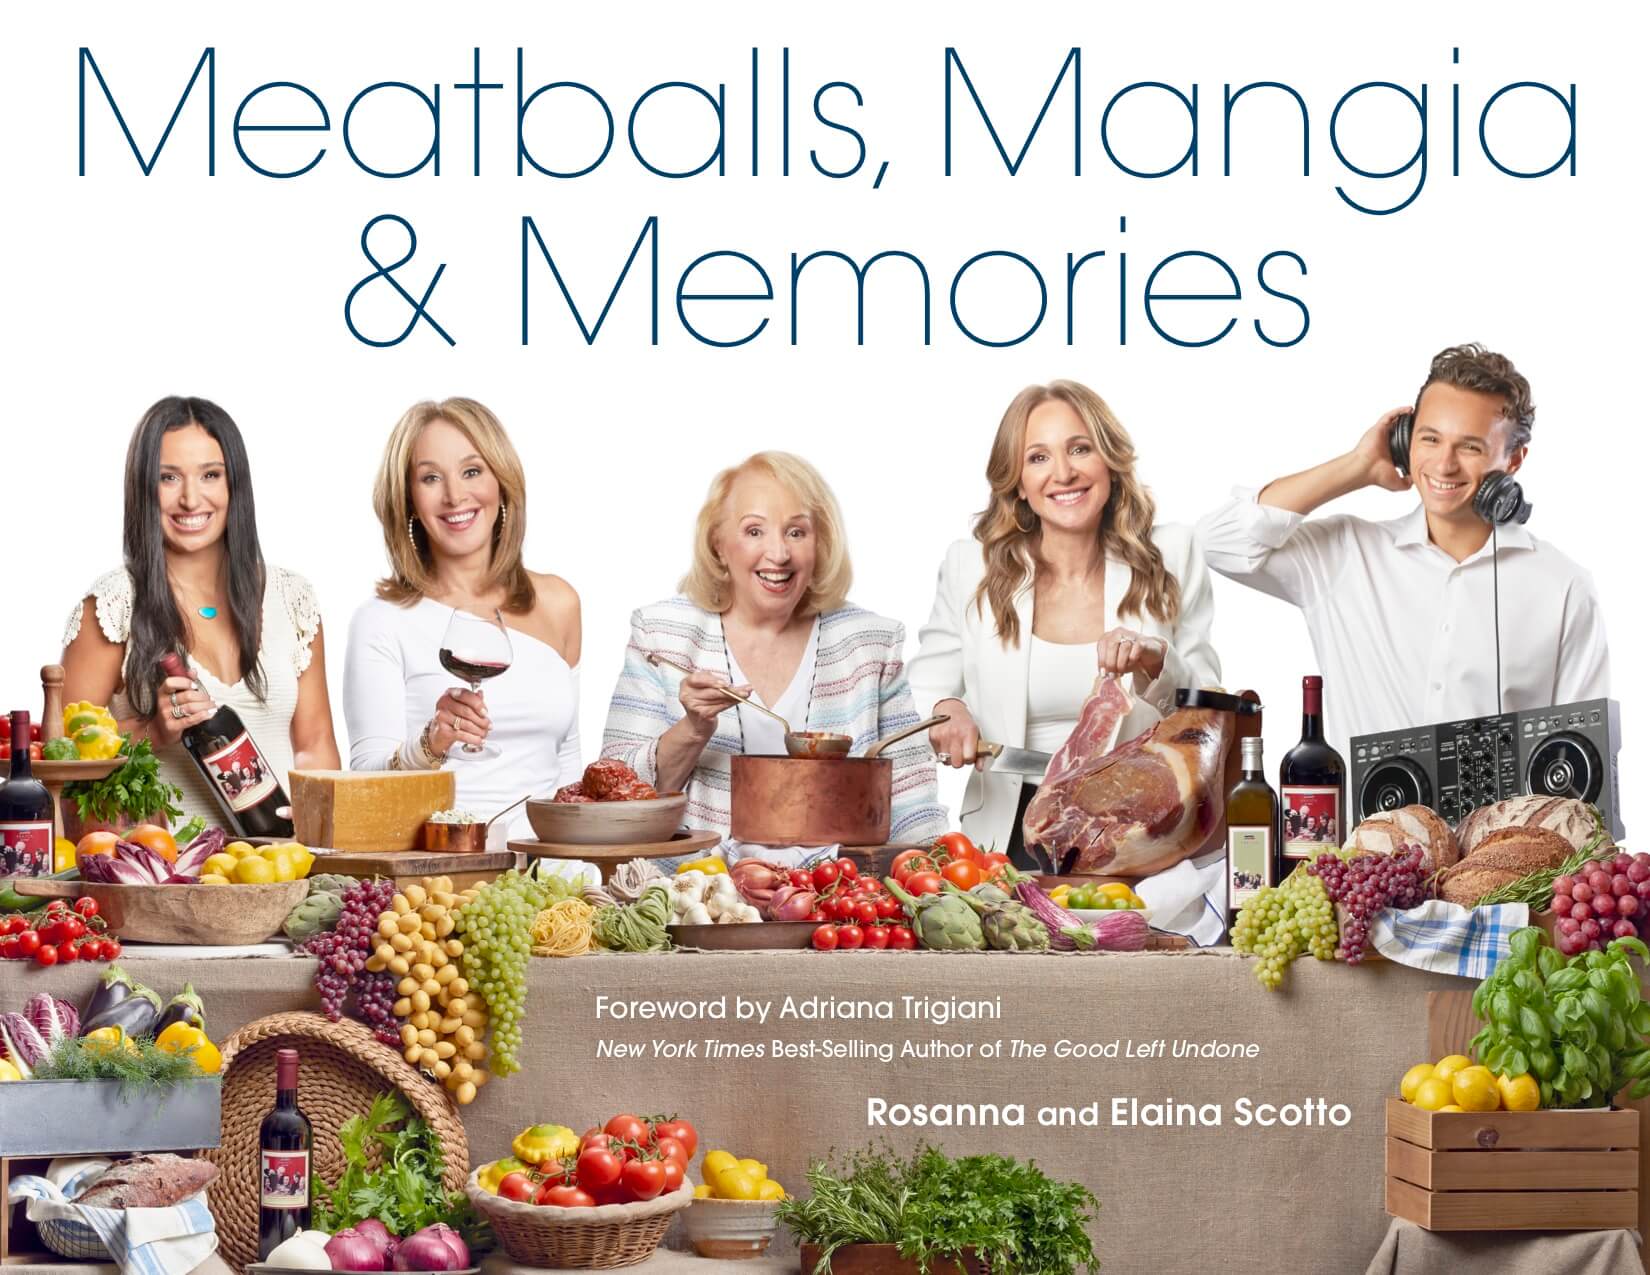 Scotto Meatballs, Mangia & Memories Front Cover